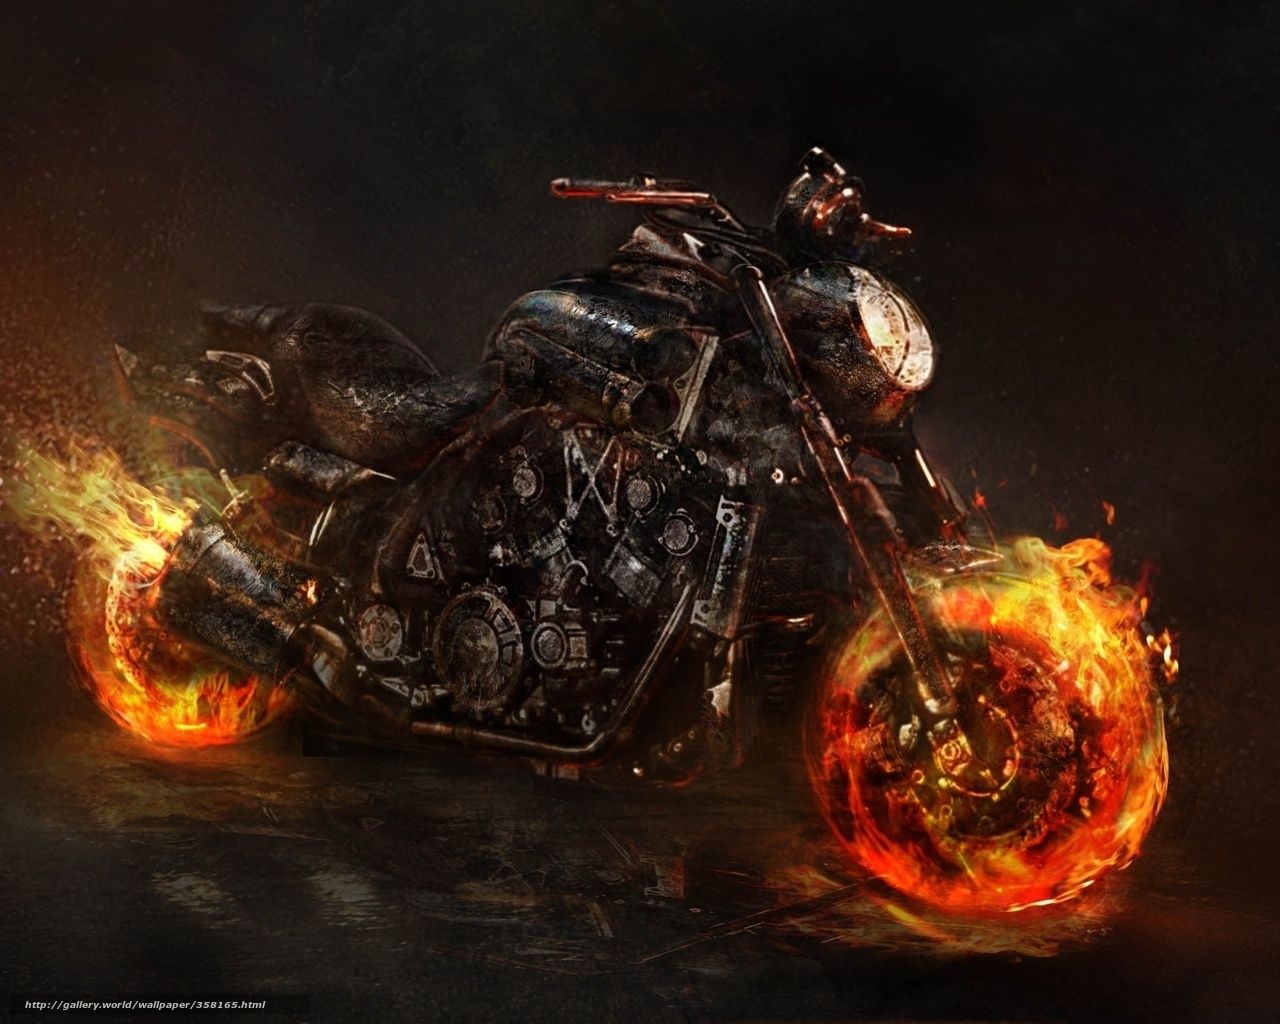 Free download motorcycle fire desktop wallpaper in the resolution